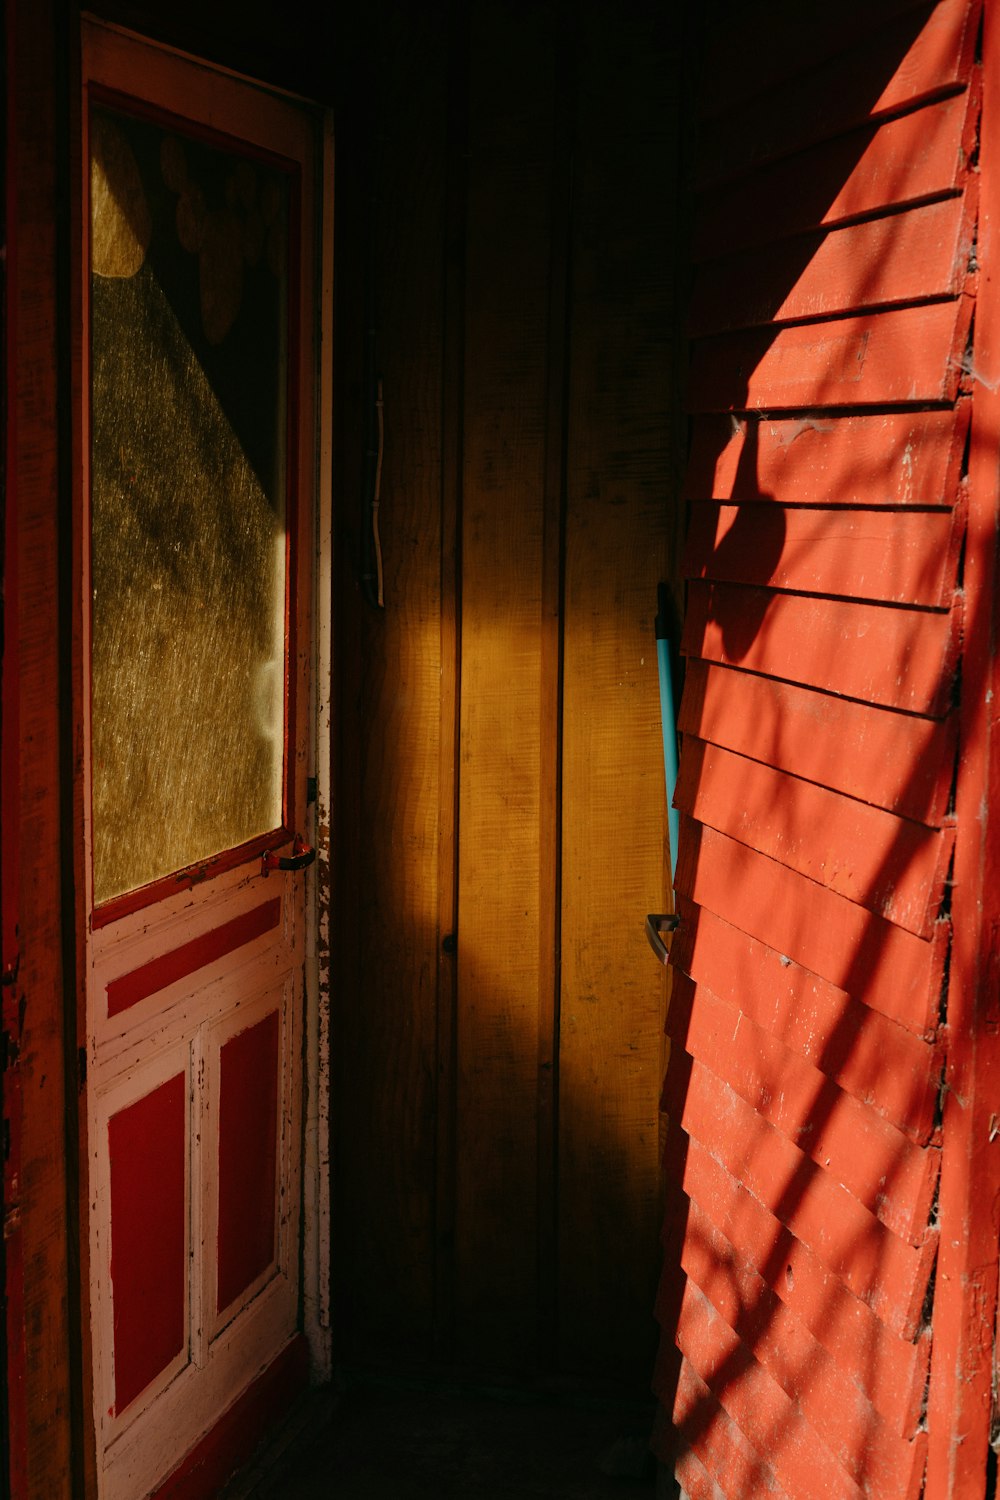 a red door and a brown door with a window